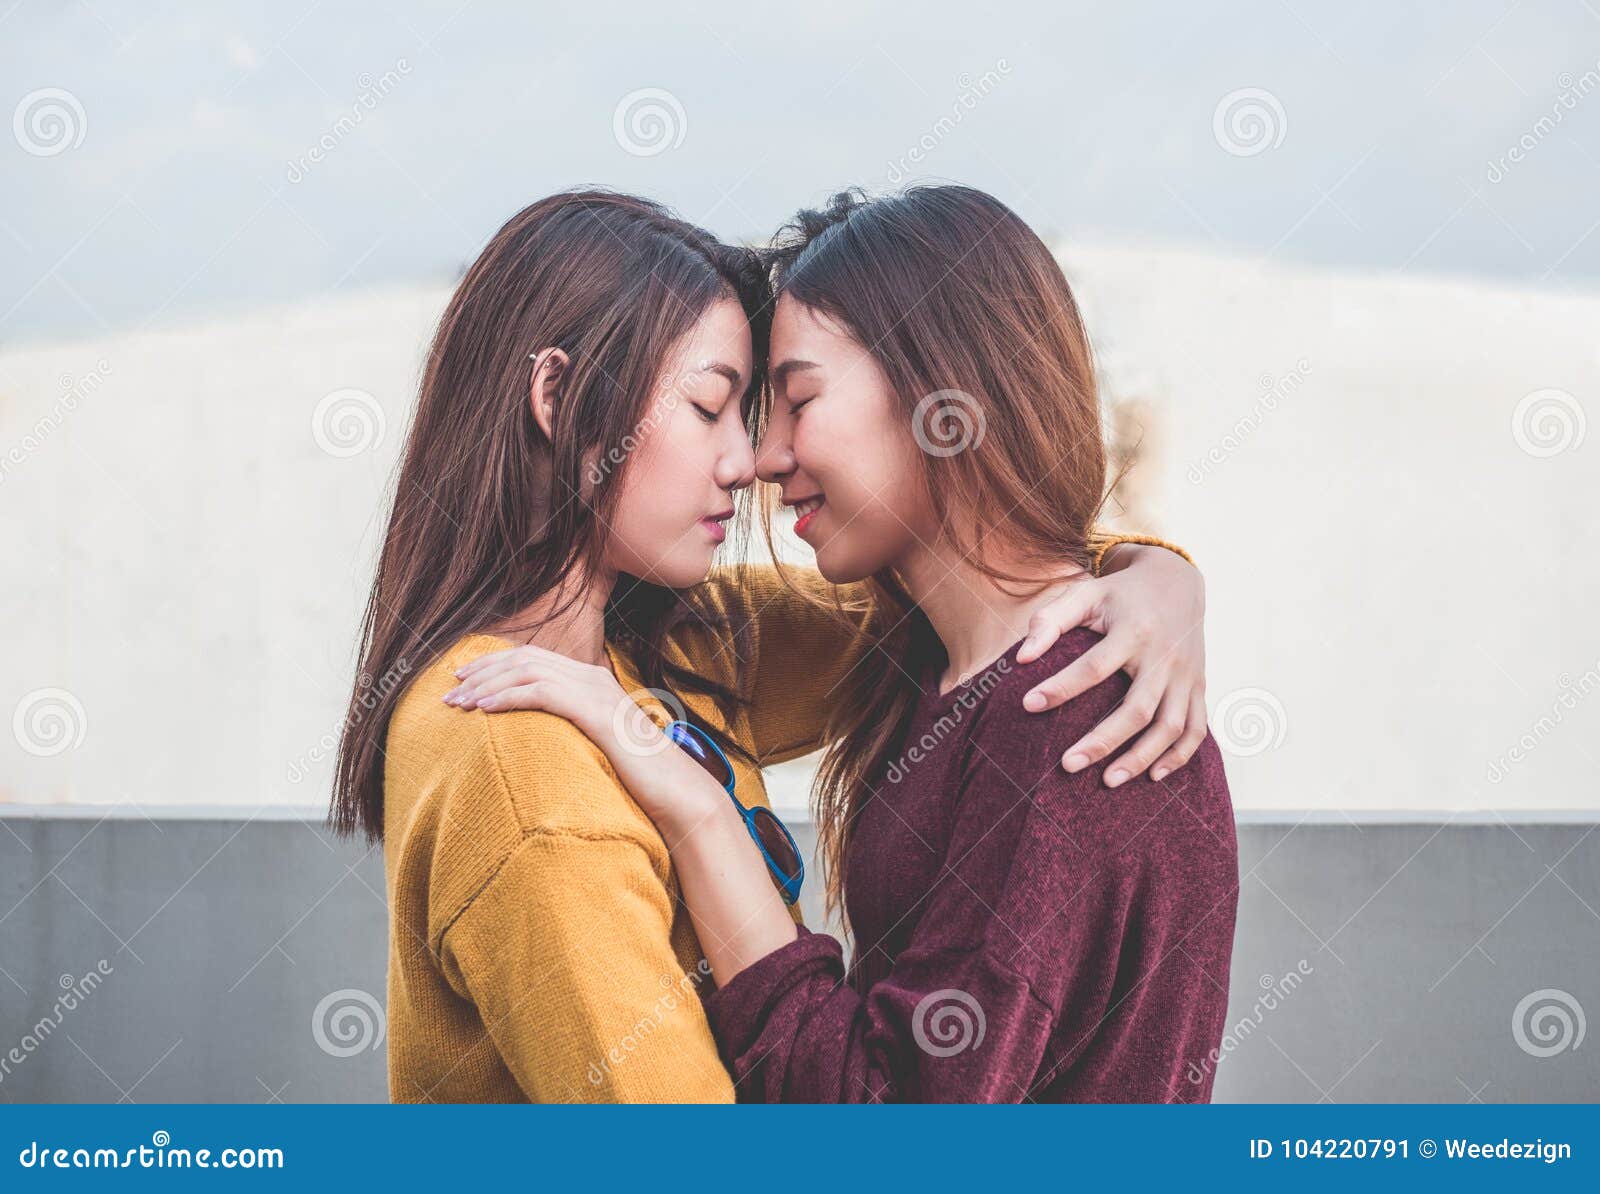 2 Girls Kissing Blowjob